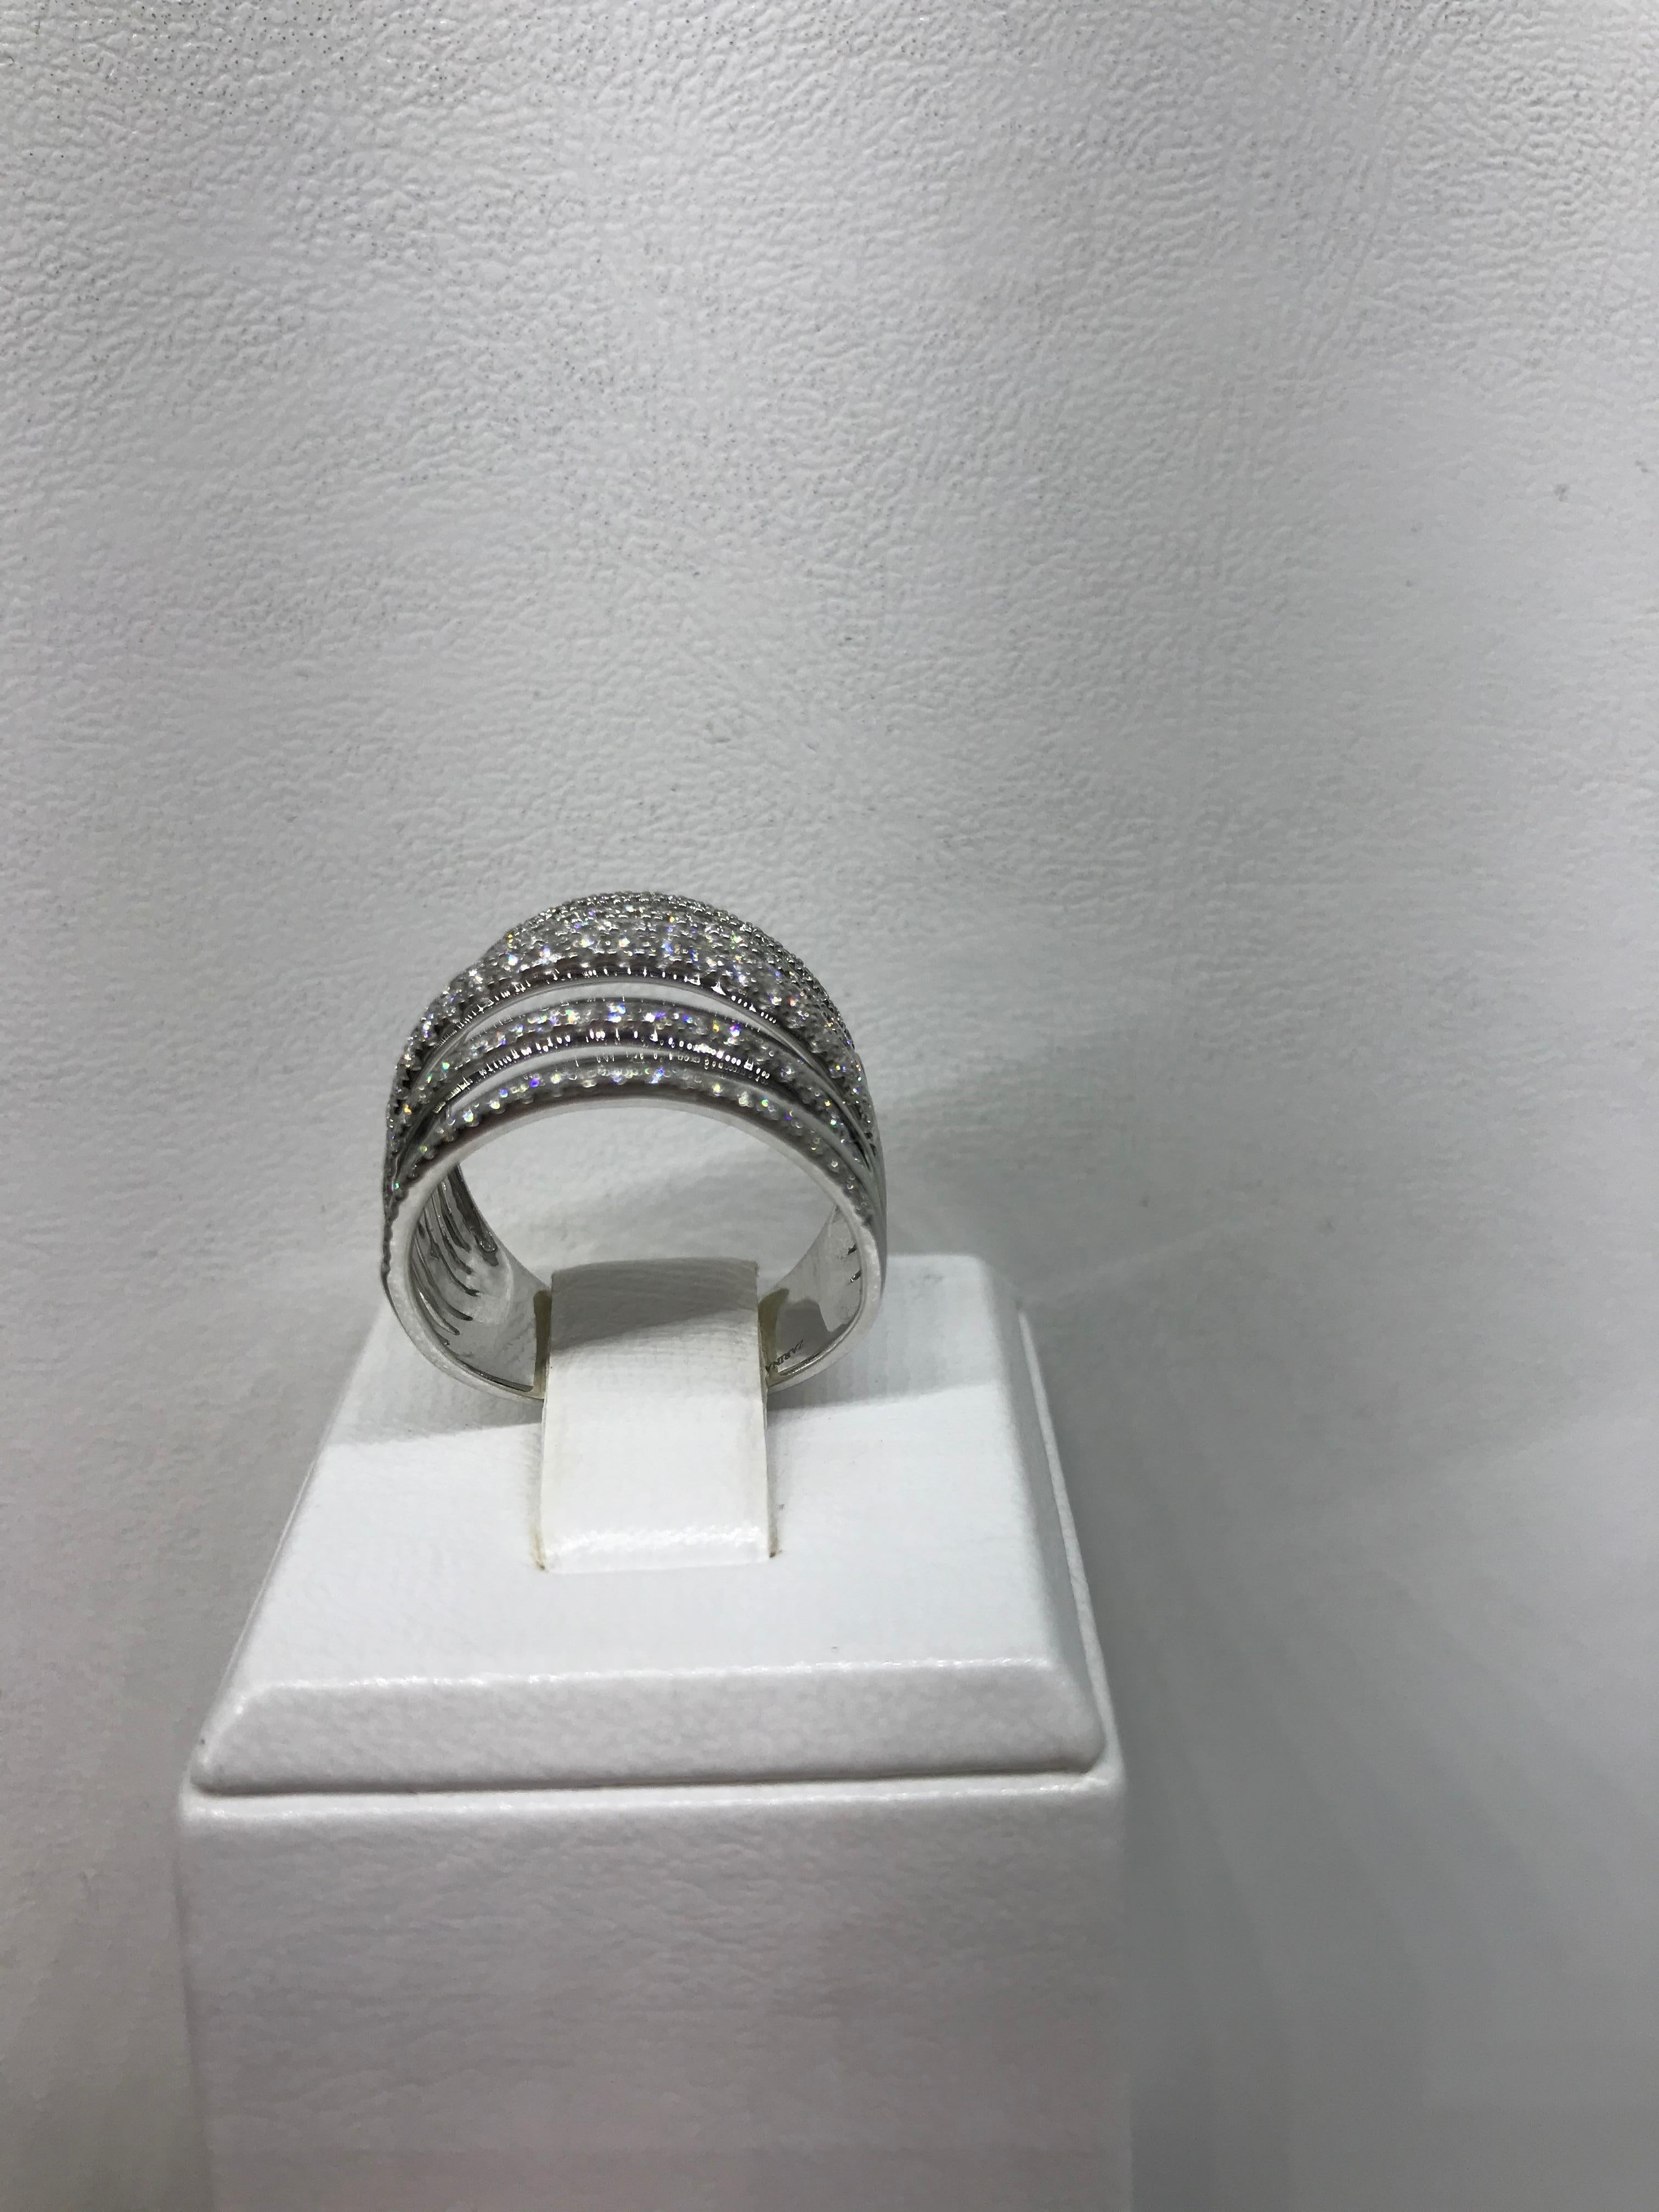 Designer Fashion Fine Jewelry White Diamond Gold Ring In New Condition For Sale In Montreux, CH